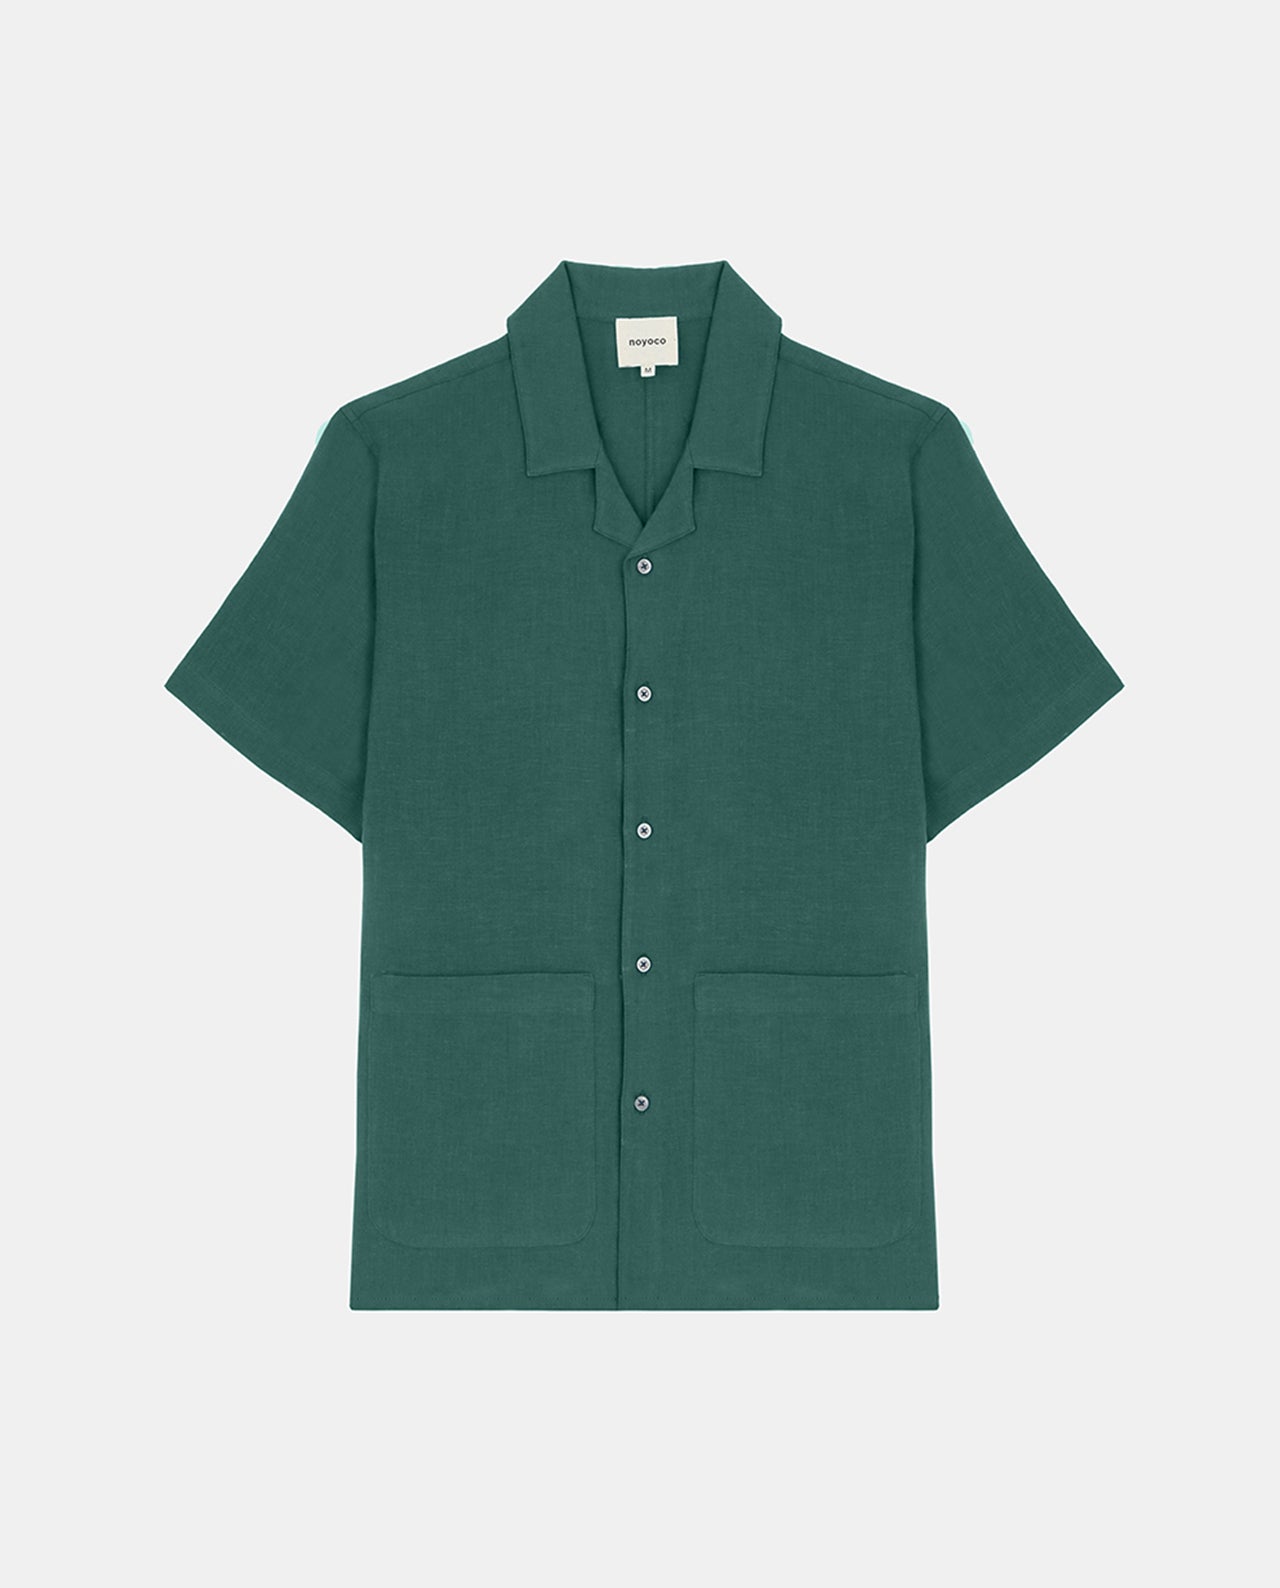 marché commun noyoco chemise homme manches courtes lin vert jade